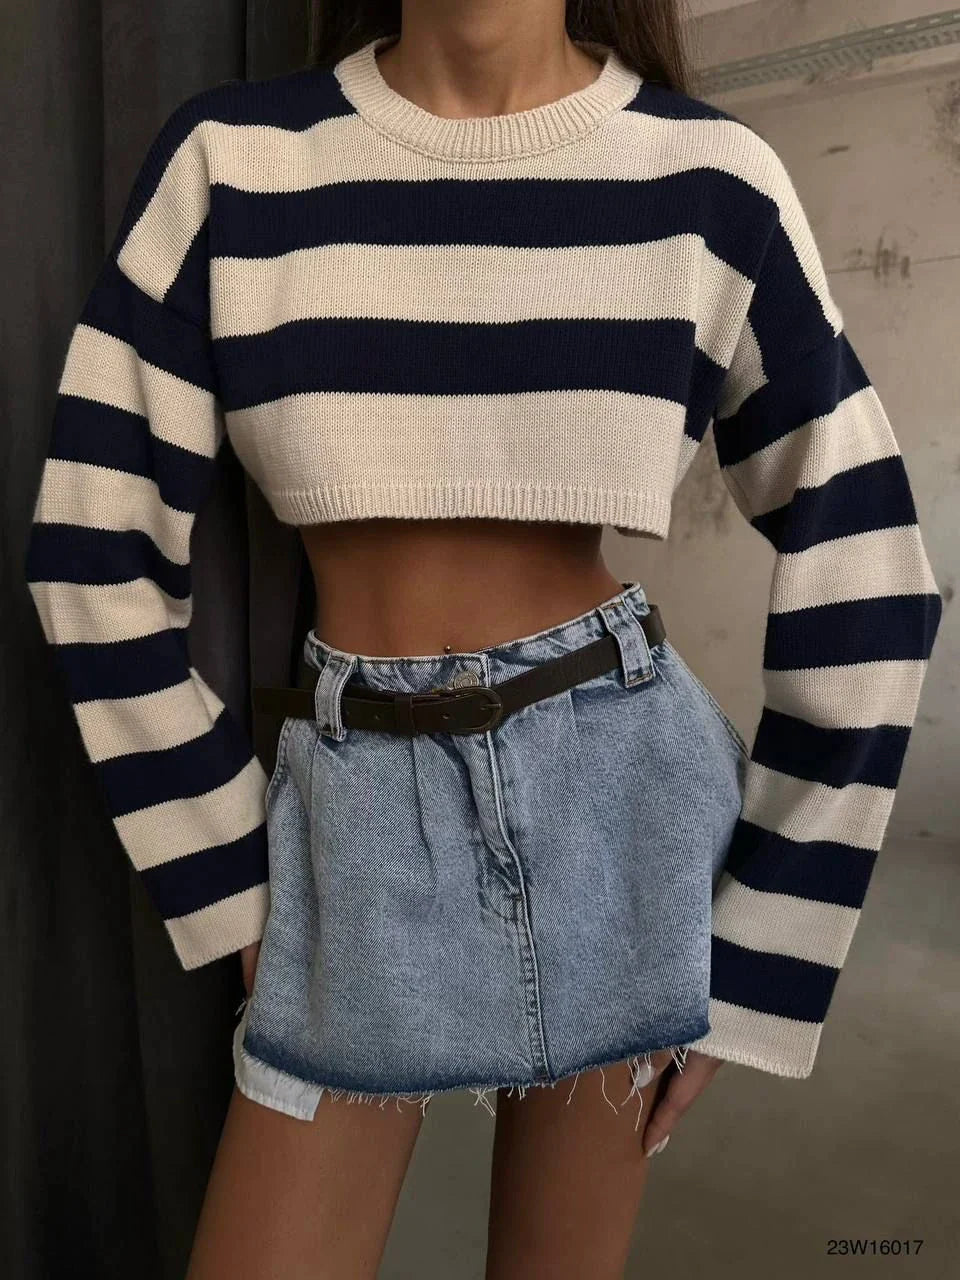 Striped crop sweater